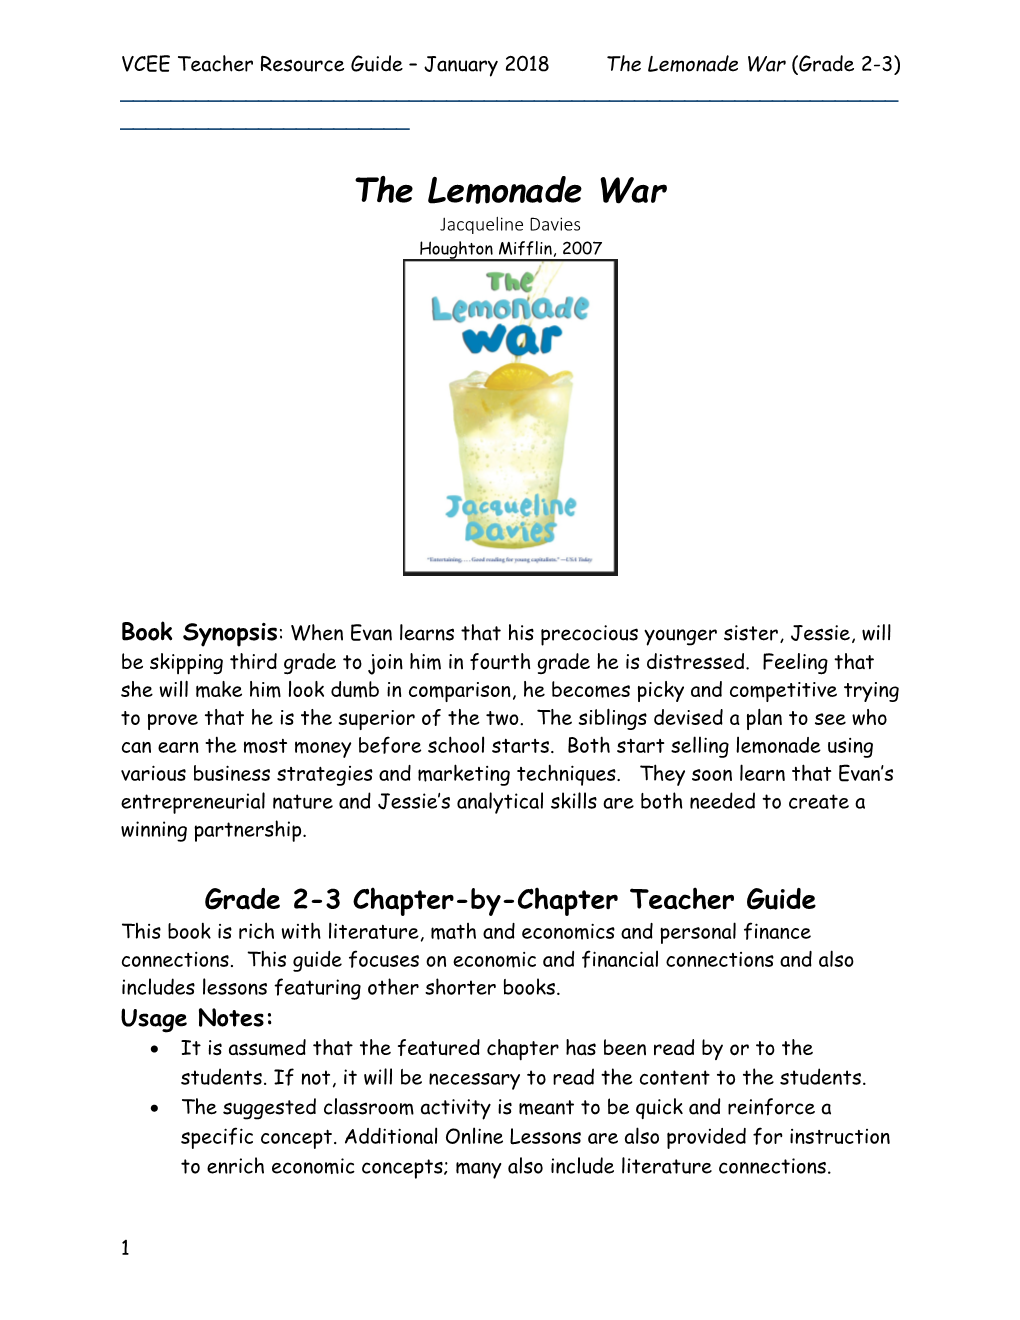 VCEE Teacher Resource Guide January 2018 the Lemonade War (Grade 2-3)